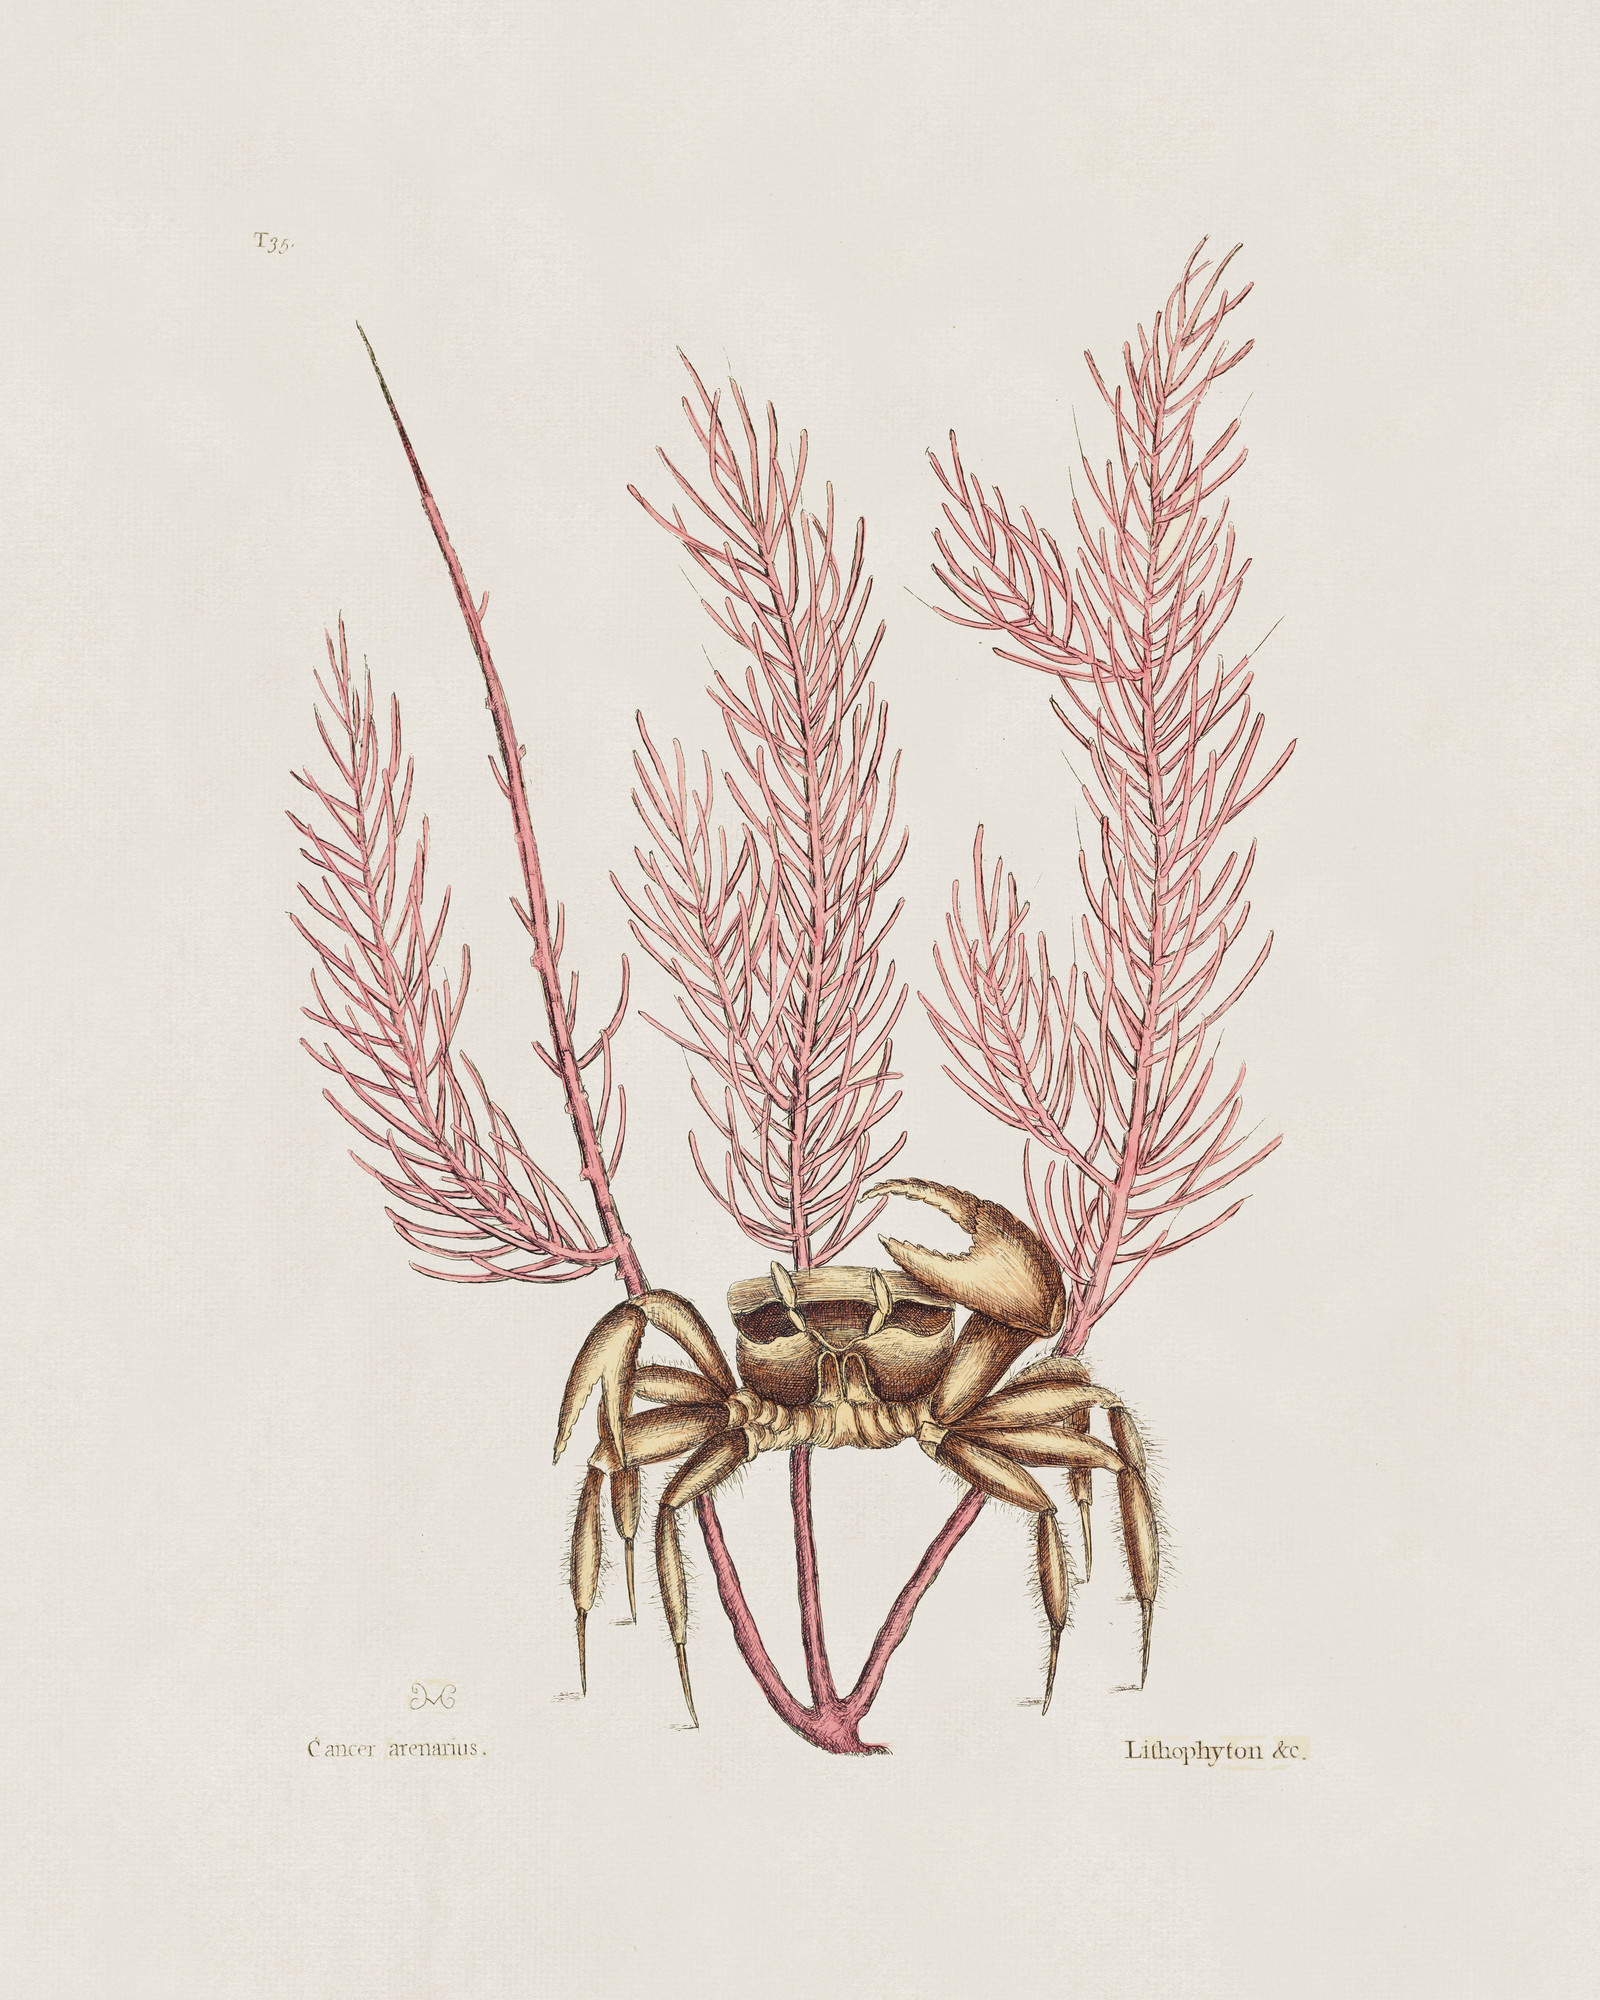 Cancer arenareus (The Sand Crab): Catesby (1743) image